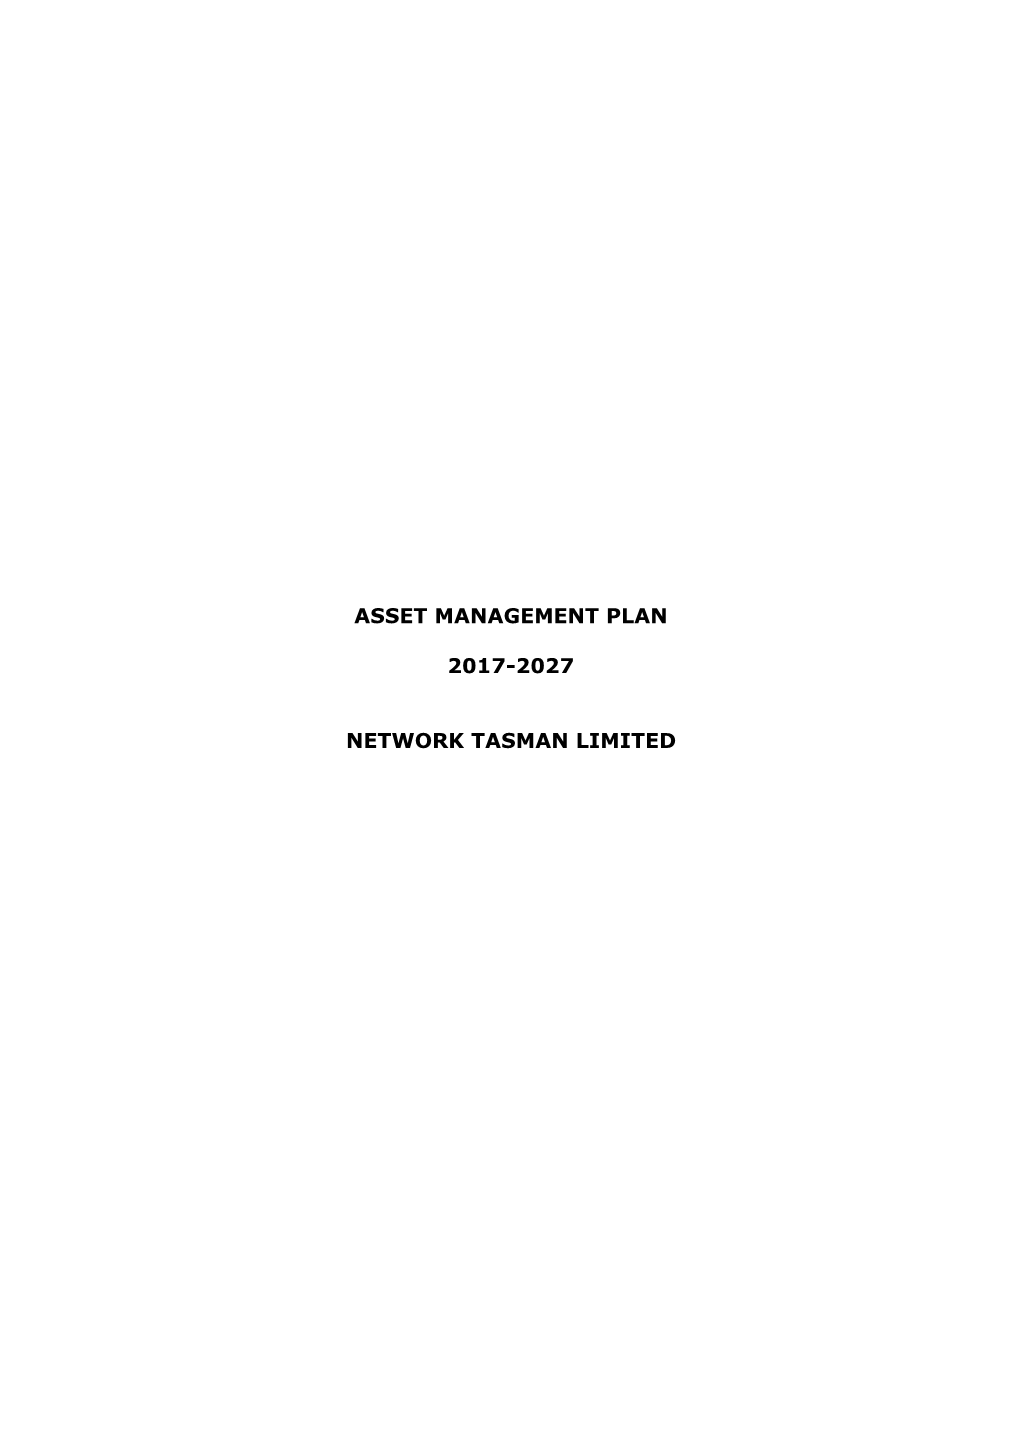 Asset Management Plan 2017-2027 Network Tasman